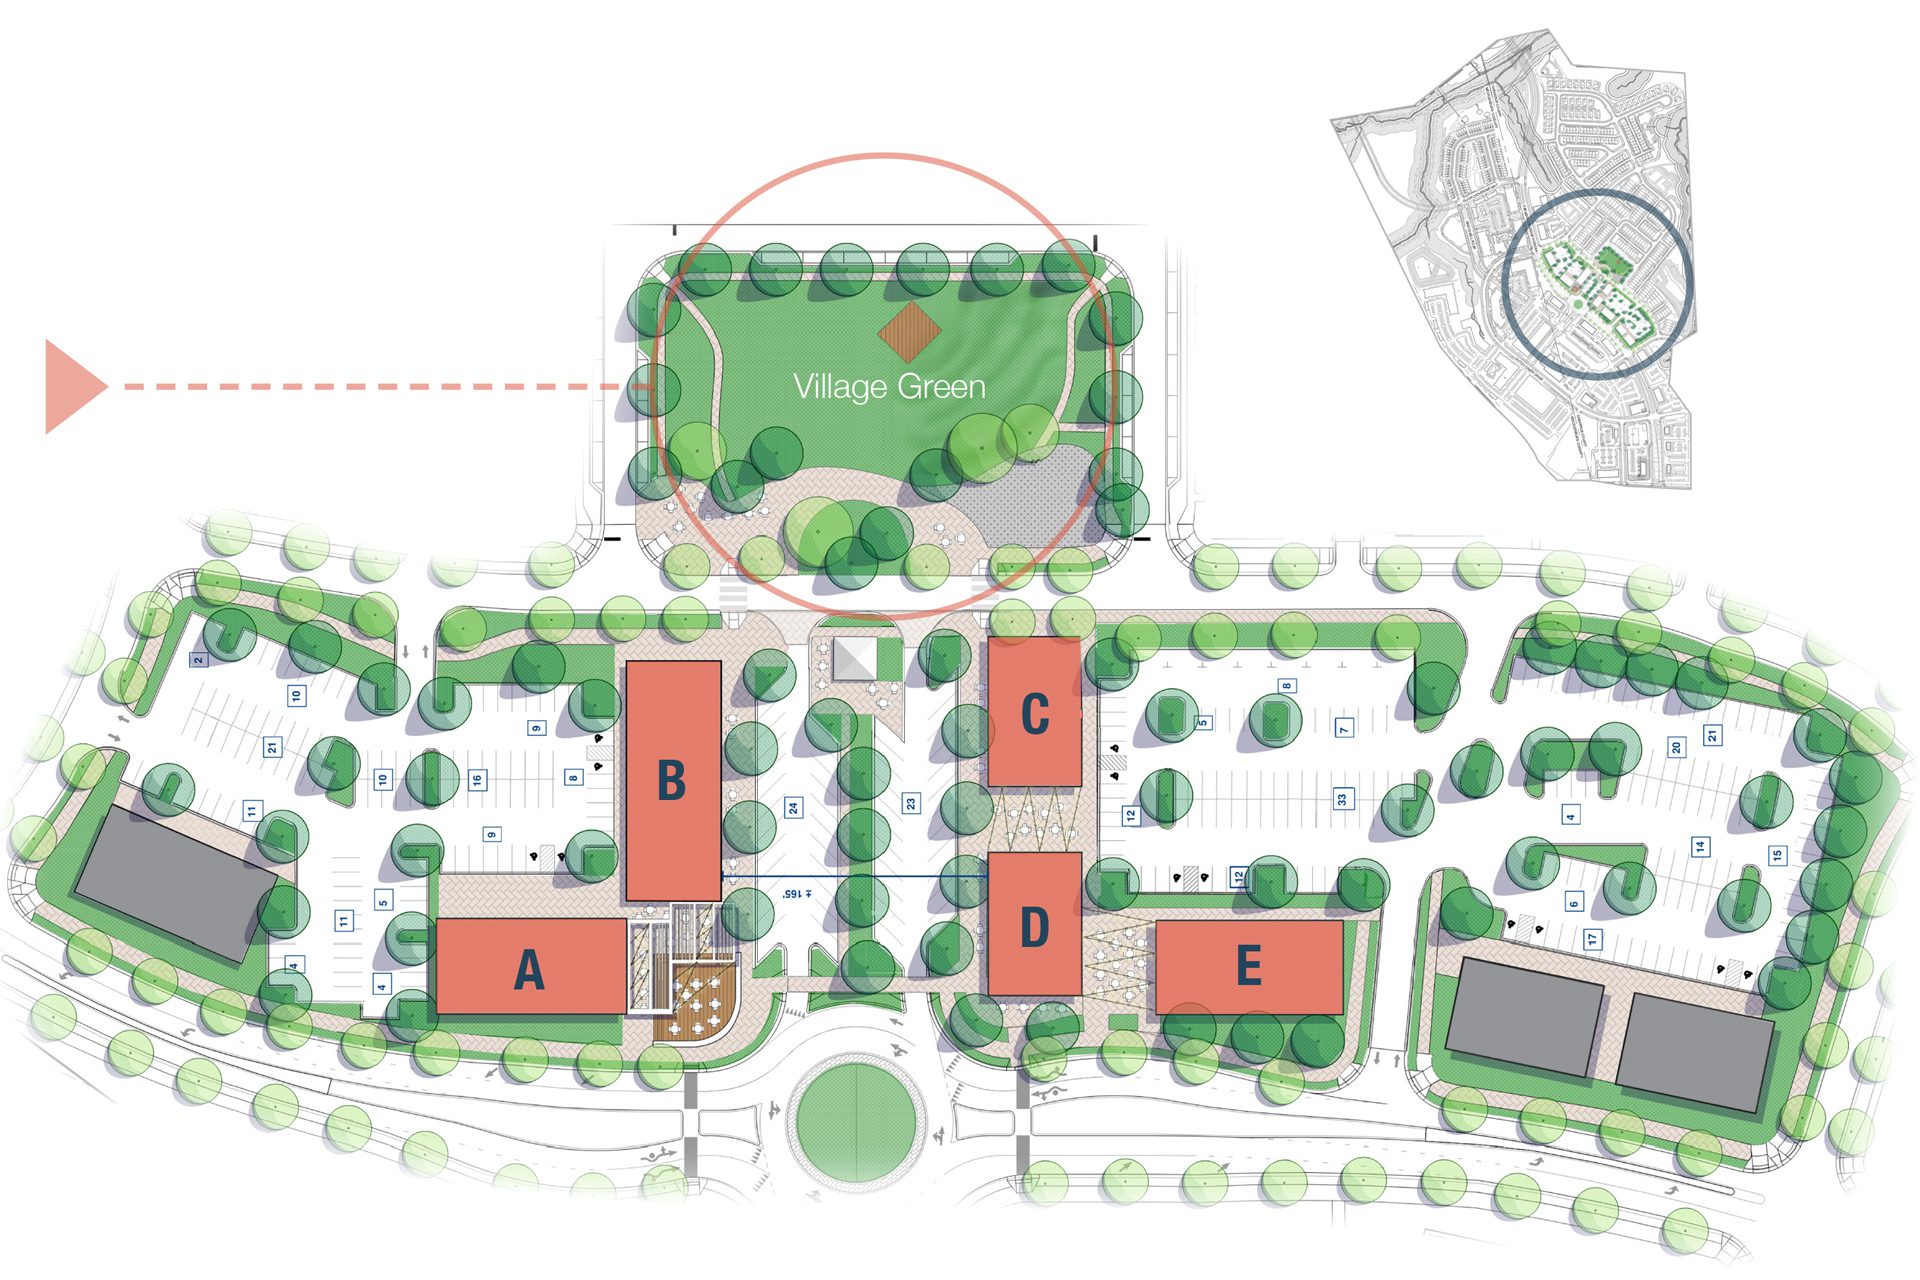 Farmington Village Center site plan with Village Green event lawn